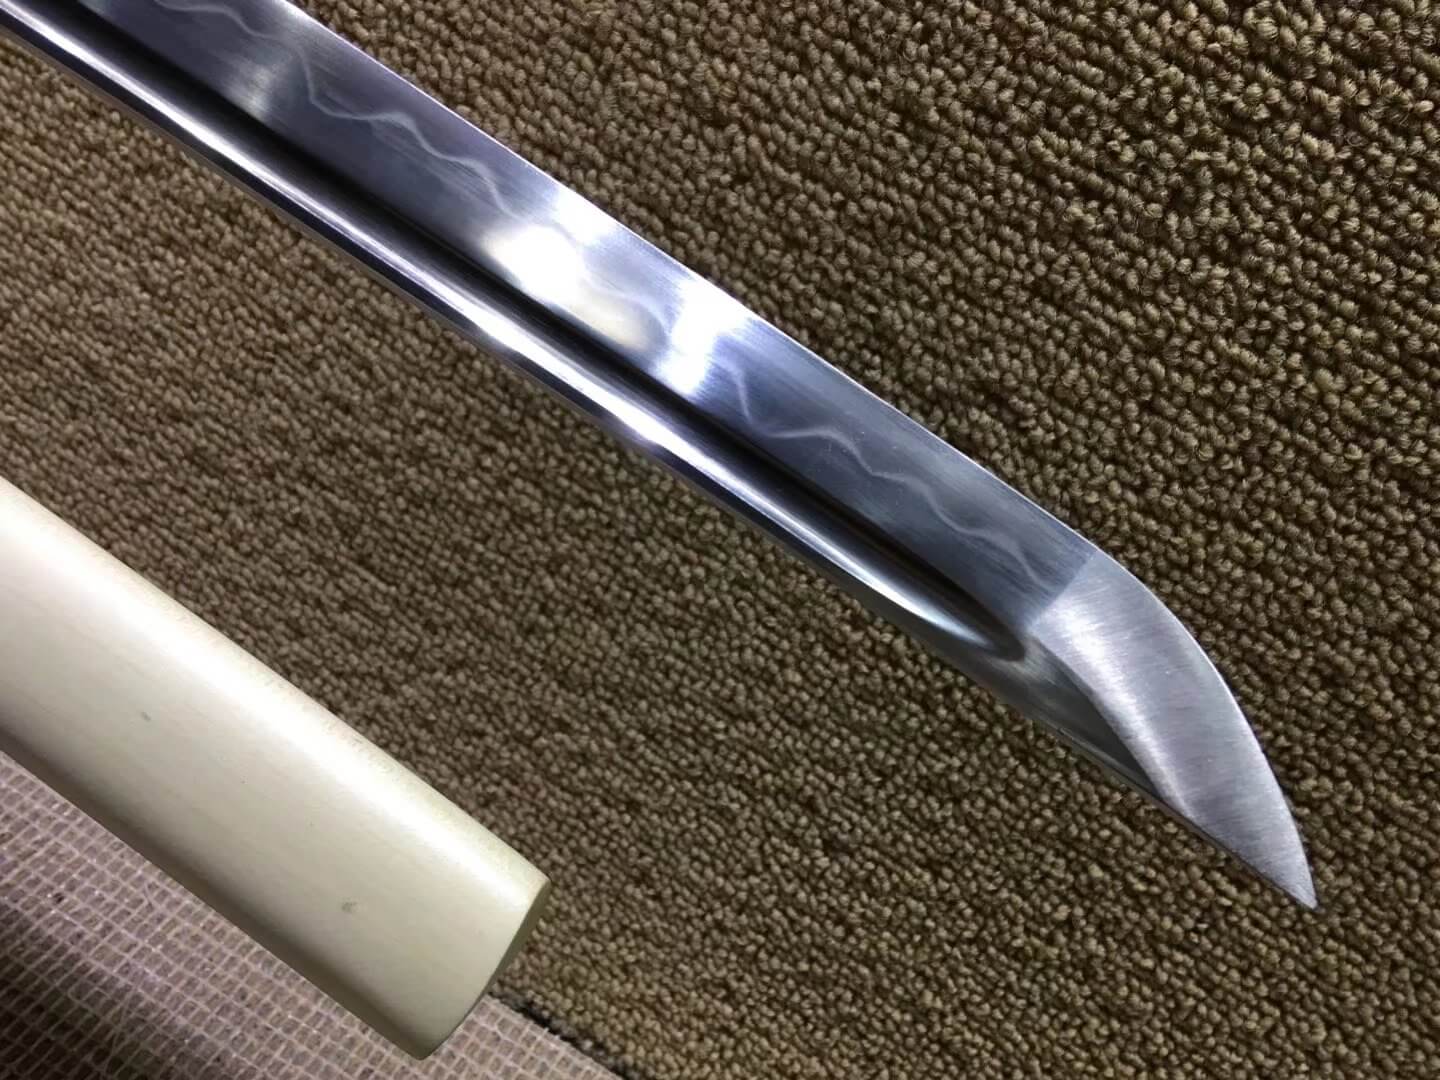 Katana,High carbon steel burn blade,Beech wood scabbard,Length 39" - Chinese sword shop